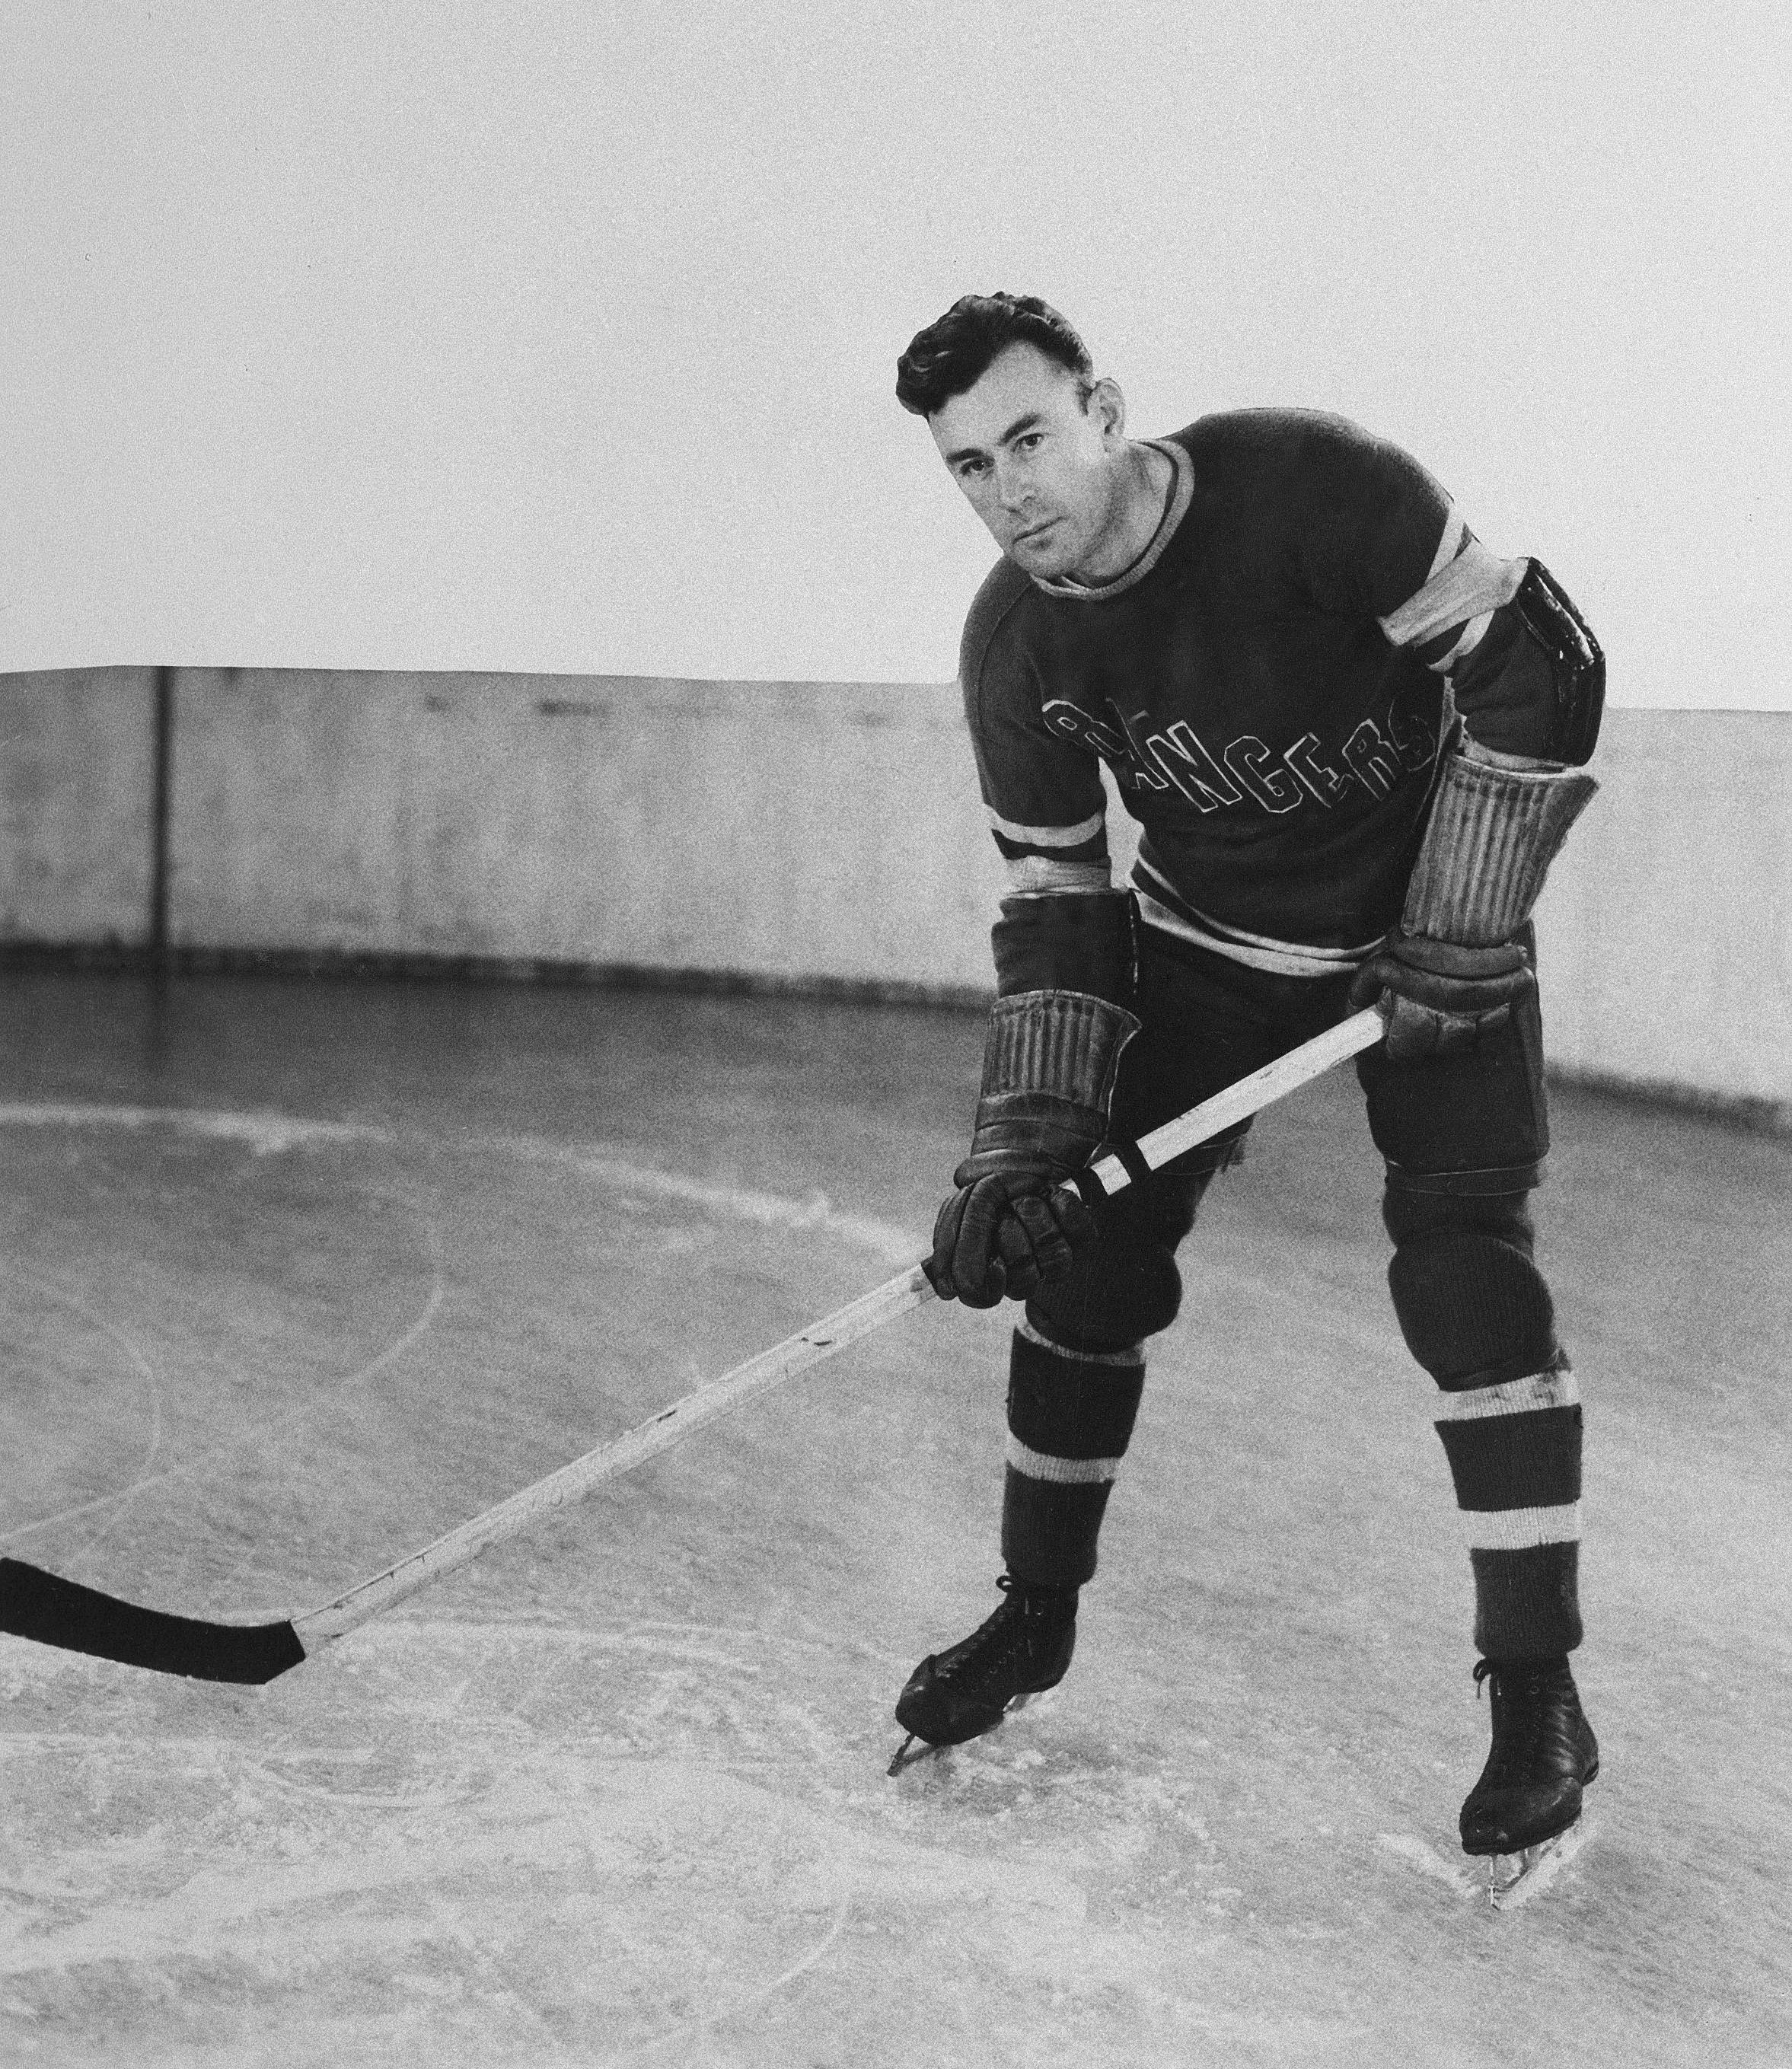 Bill Cook of the New York Rangers Hockey team, Jan. 27, 1934. (AP Photo)